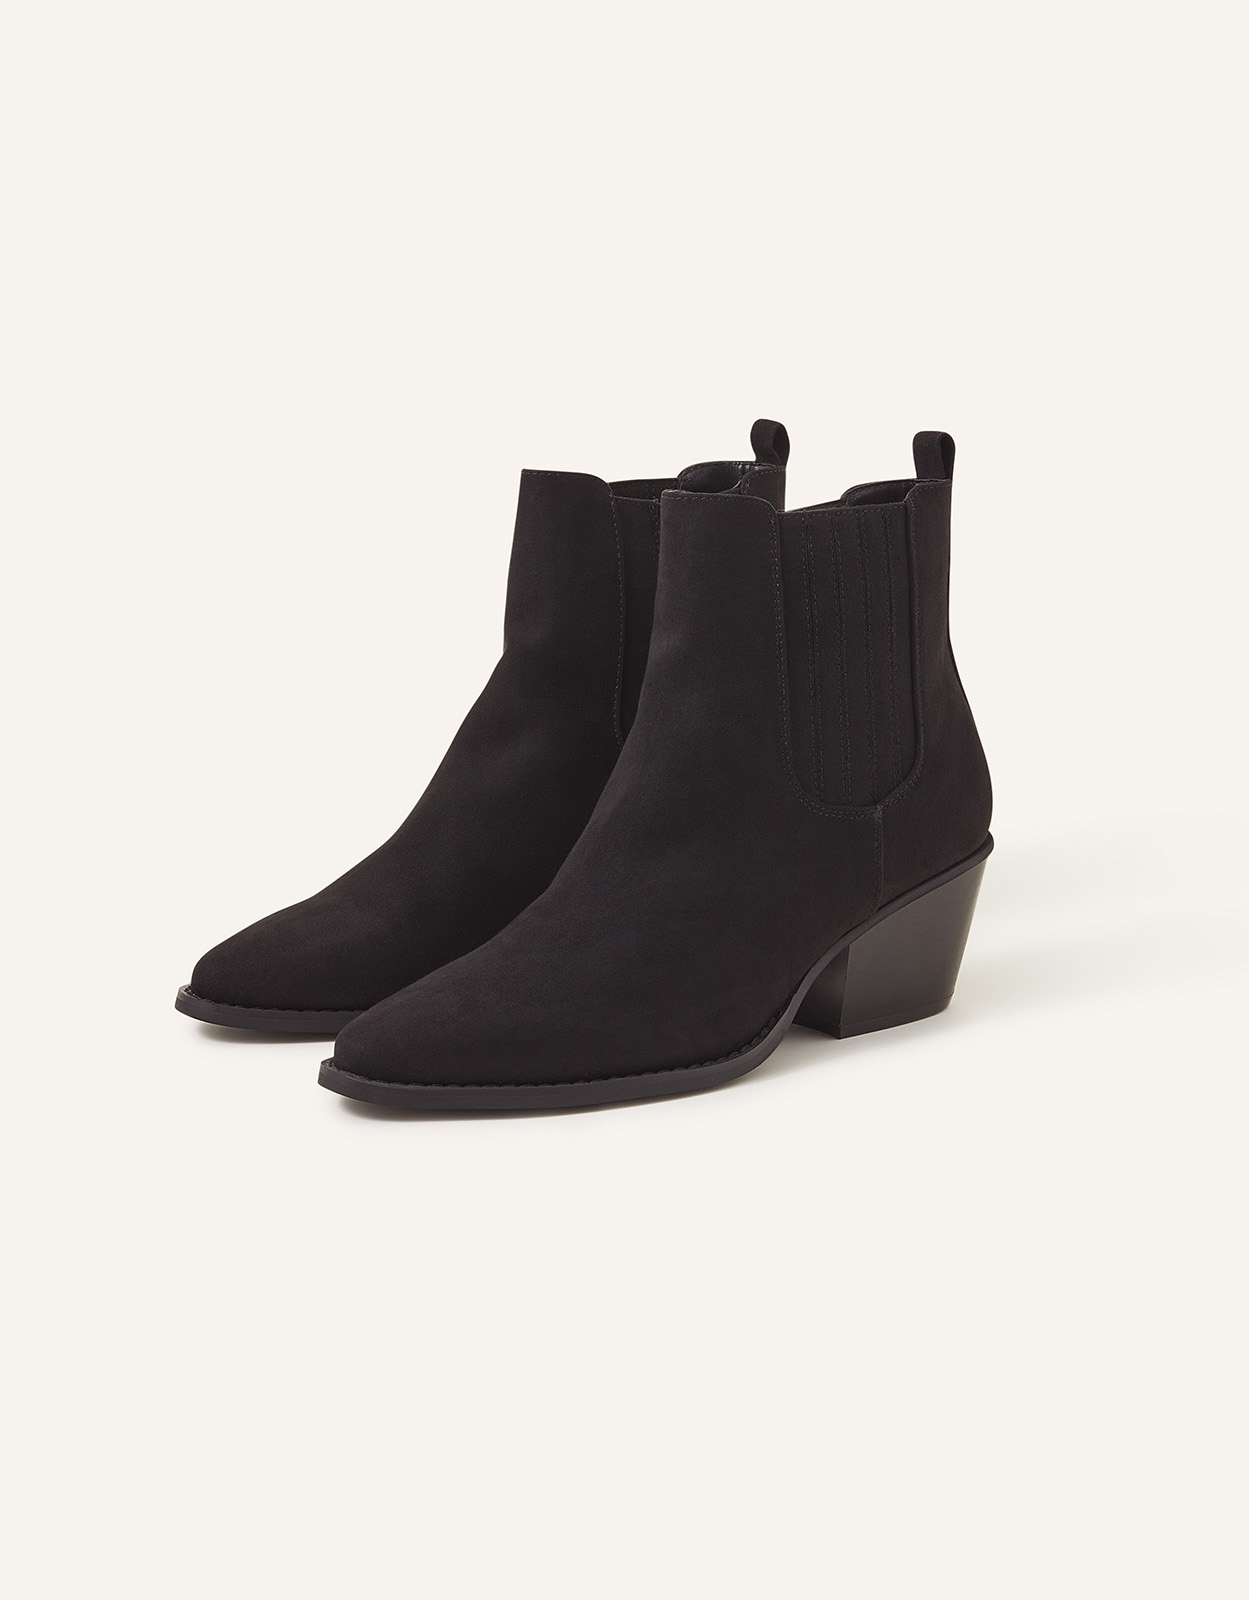 Accessorize Women's Western Boots Black, Size: 41